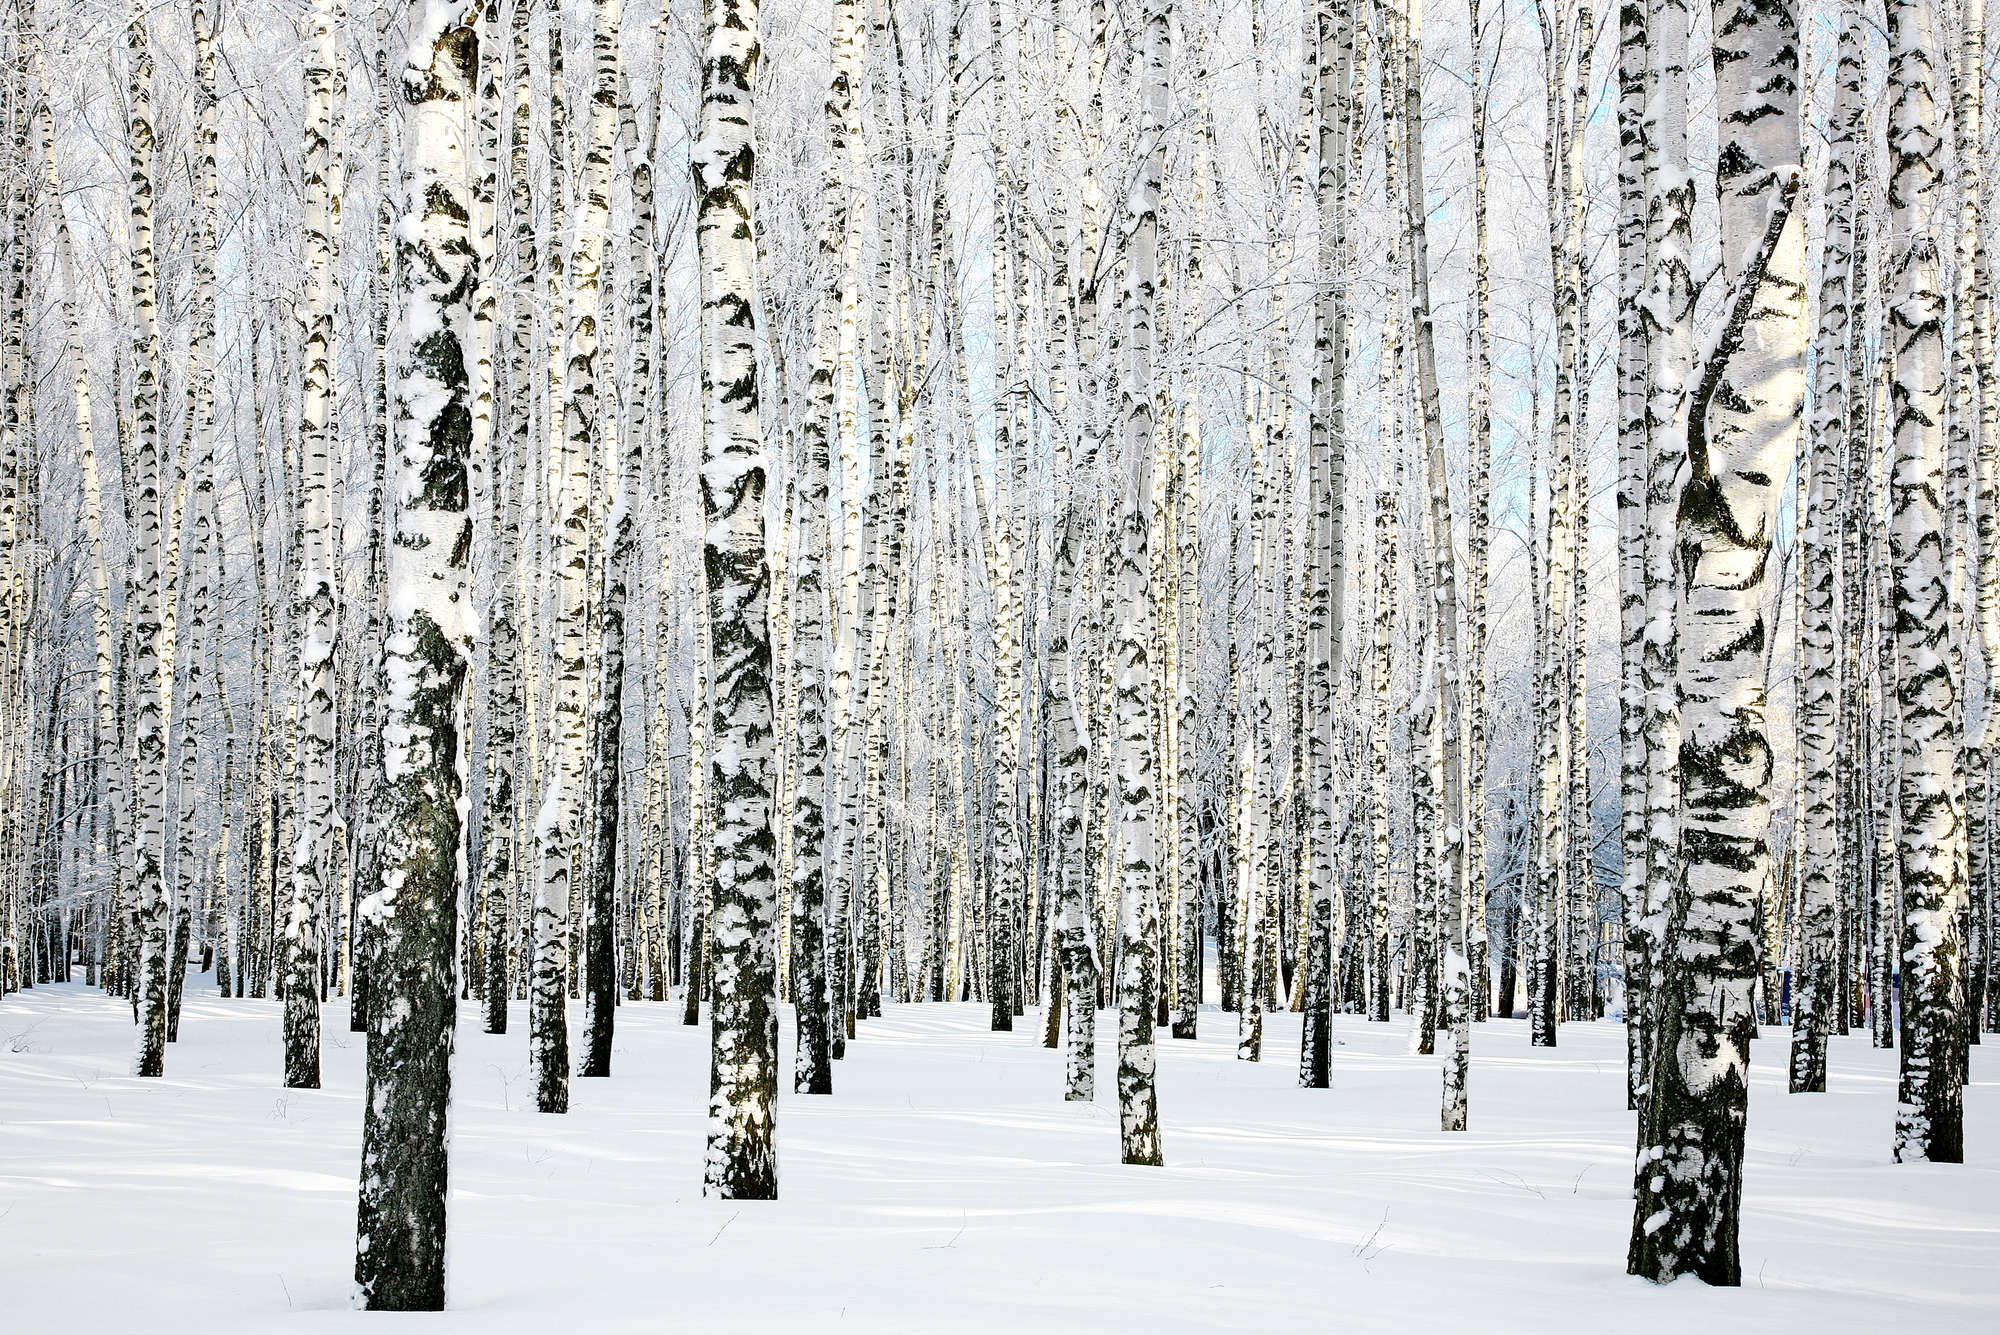             Nature mural birch forest in winter on matt smooth fleece
        